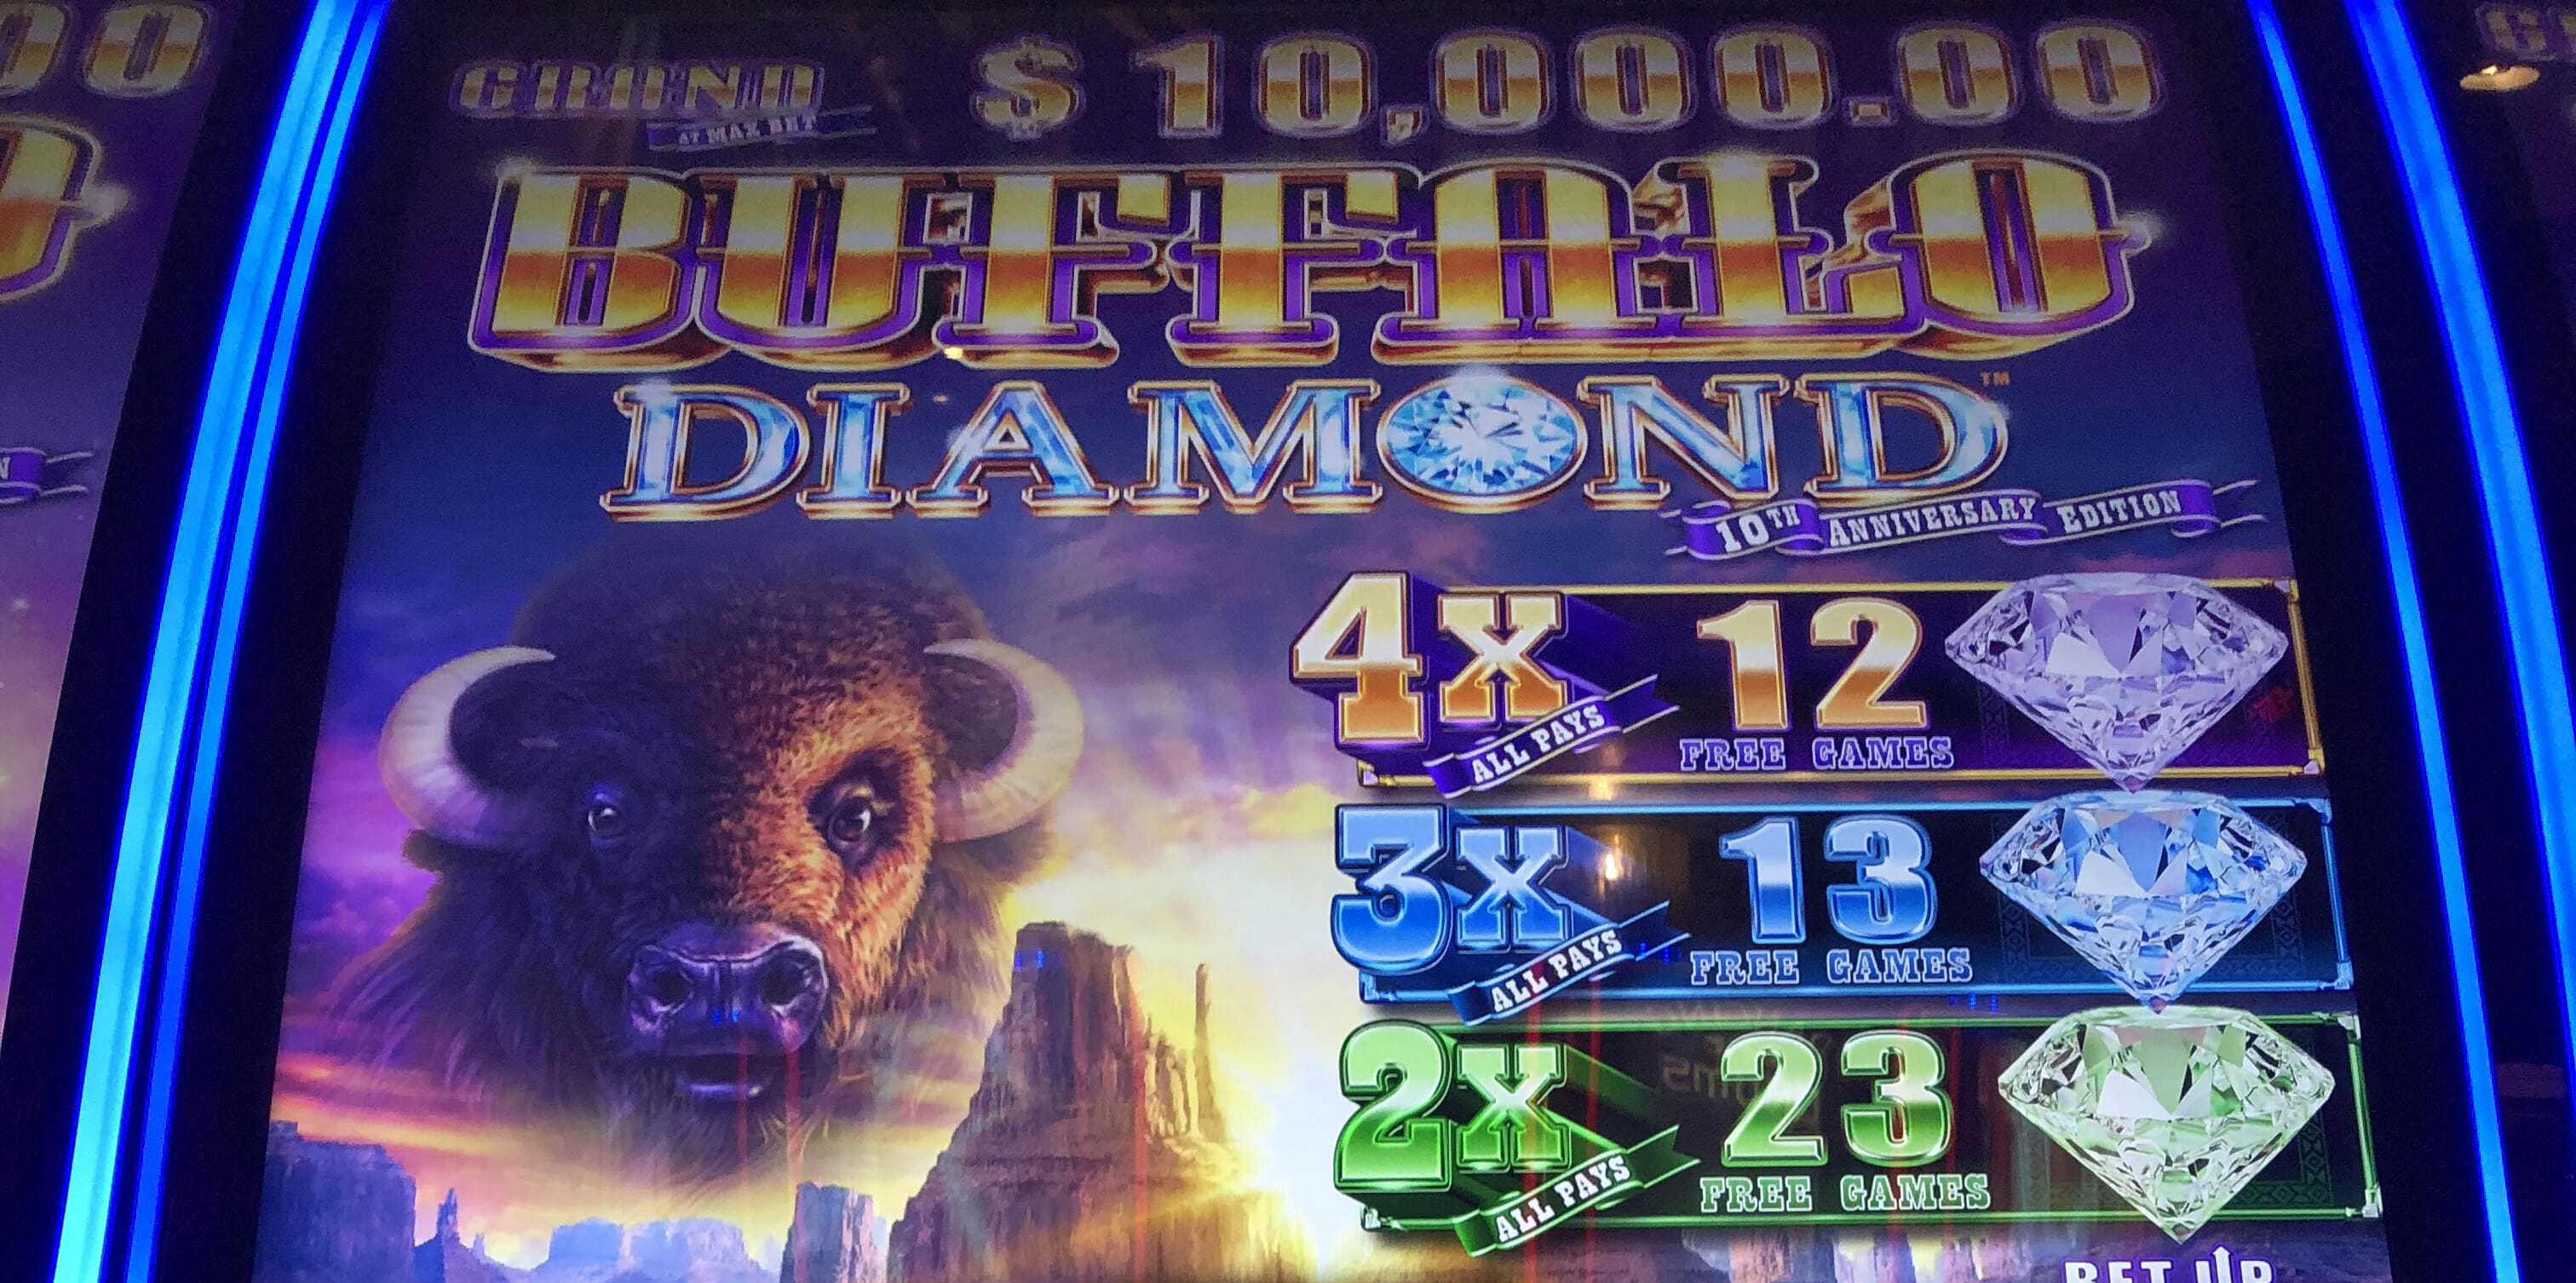 Buffalo gold collection slot machine app